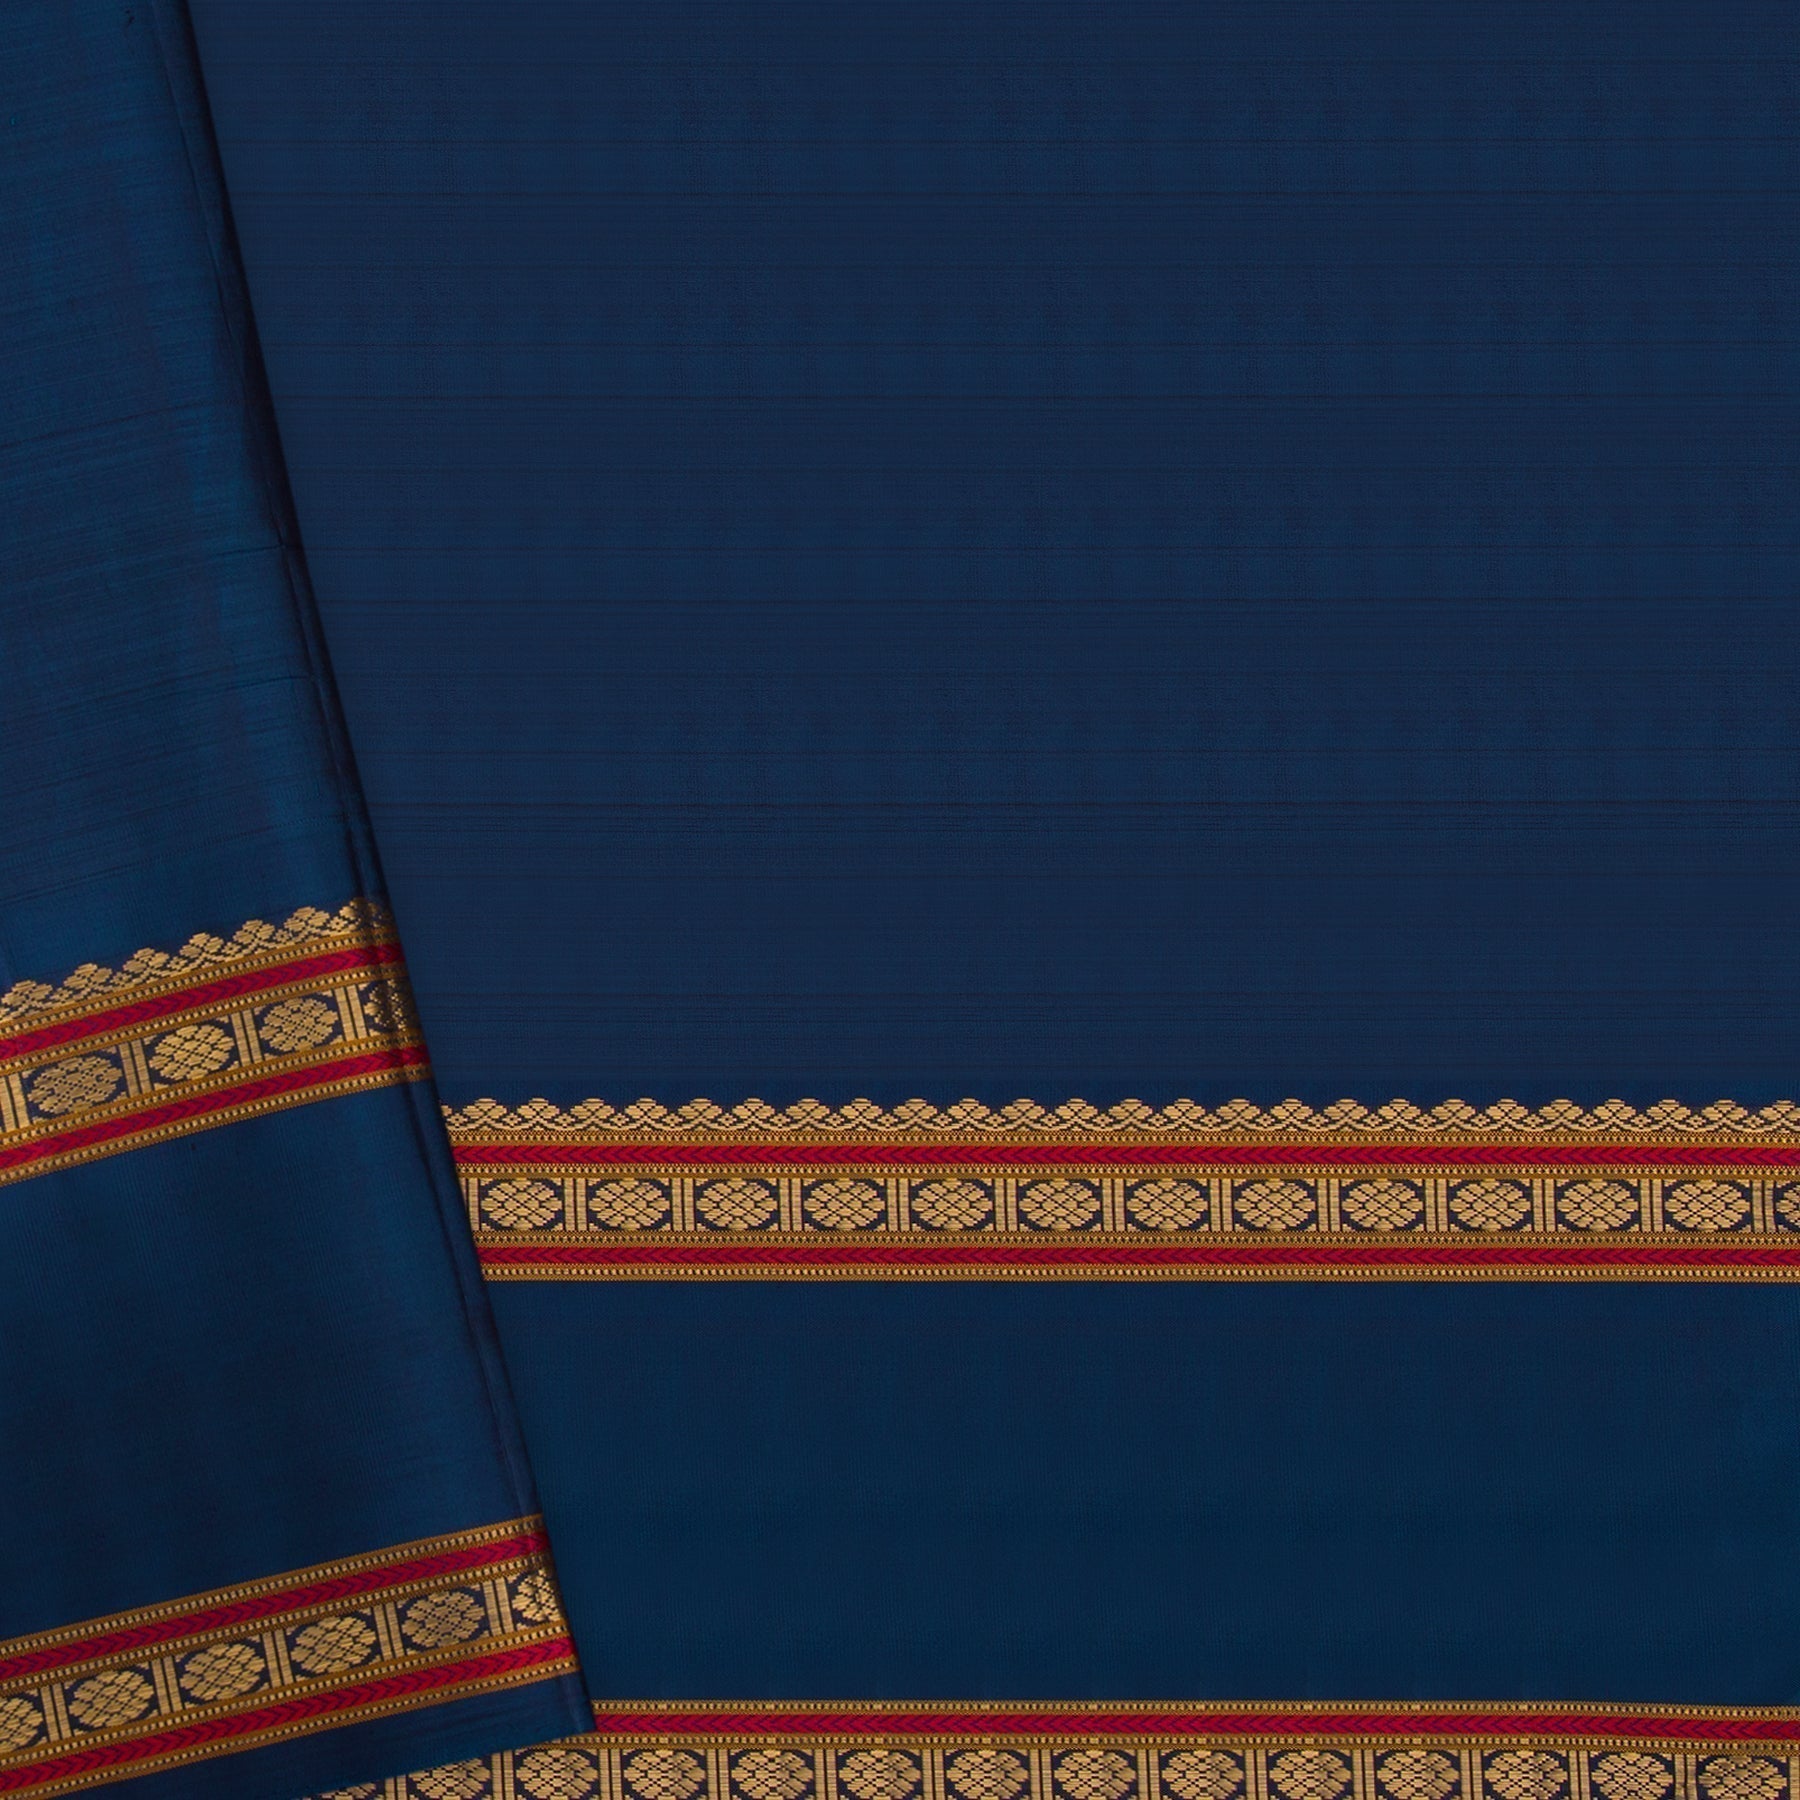 Kanakavalli Kanjivaram Silk Sari 22-041-HS001-05787 - Blouse View